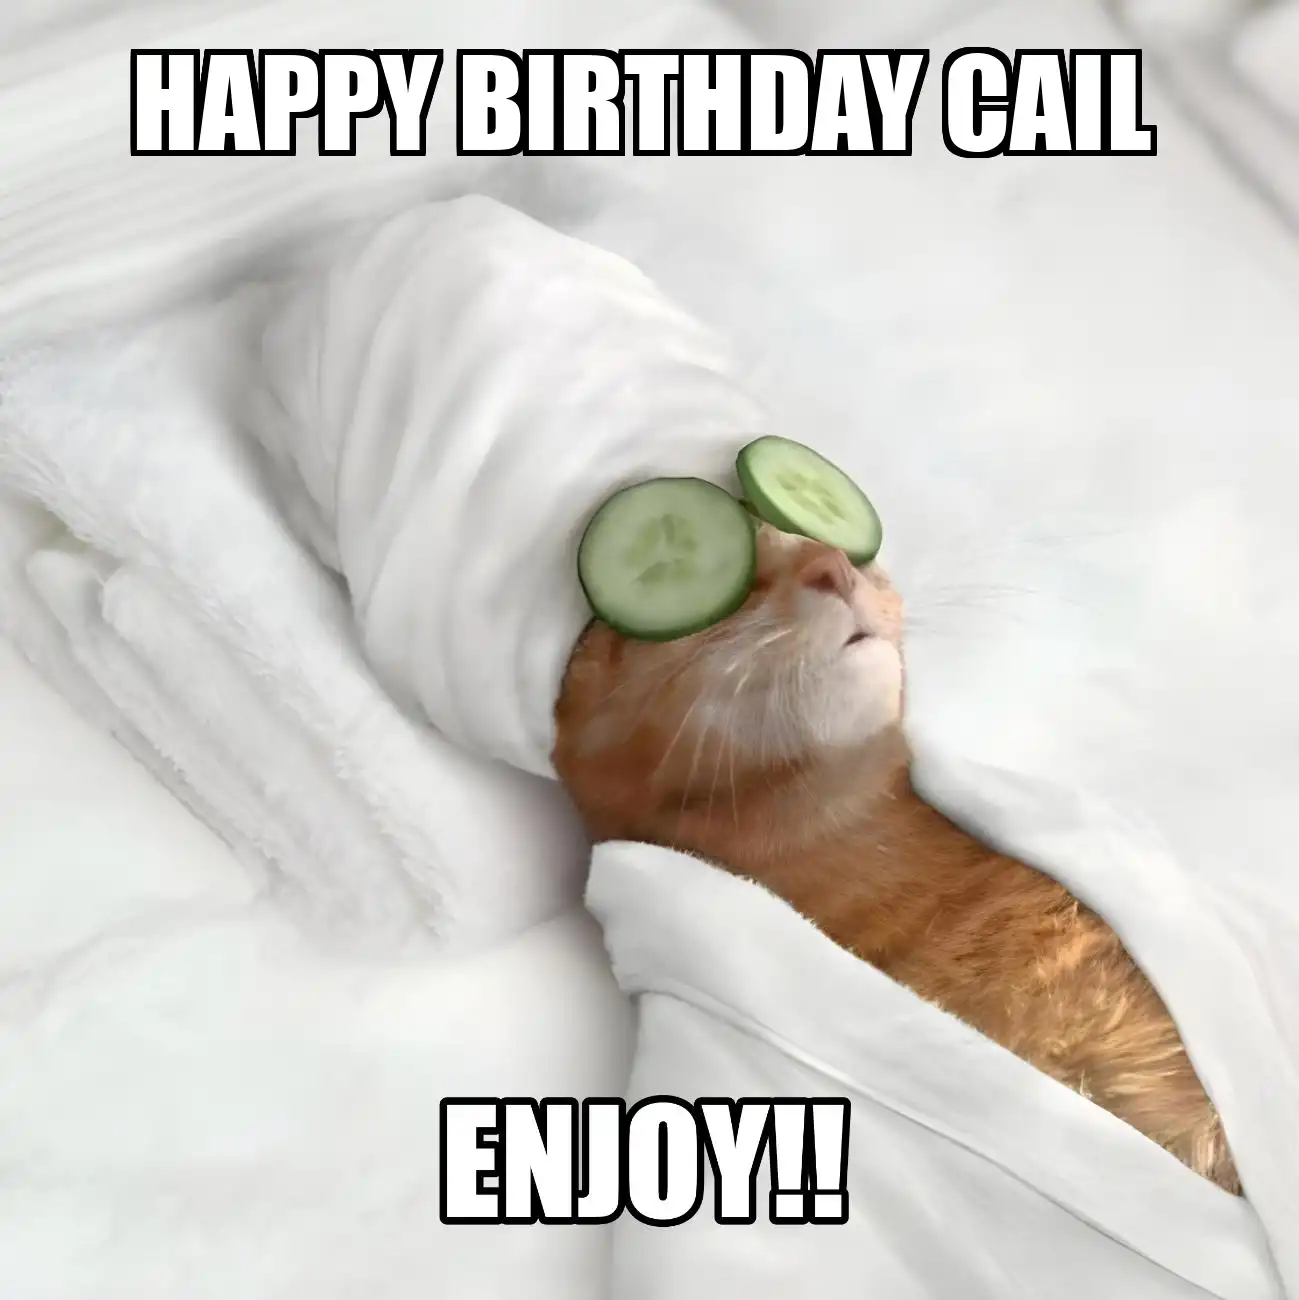 Happy Birthday Cail Enjoy Cat Meme